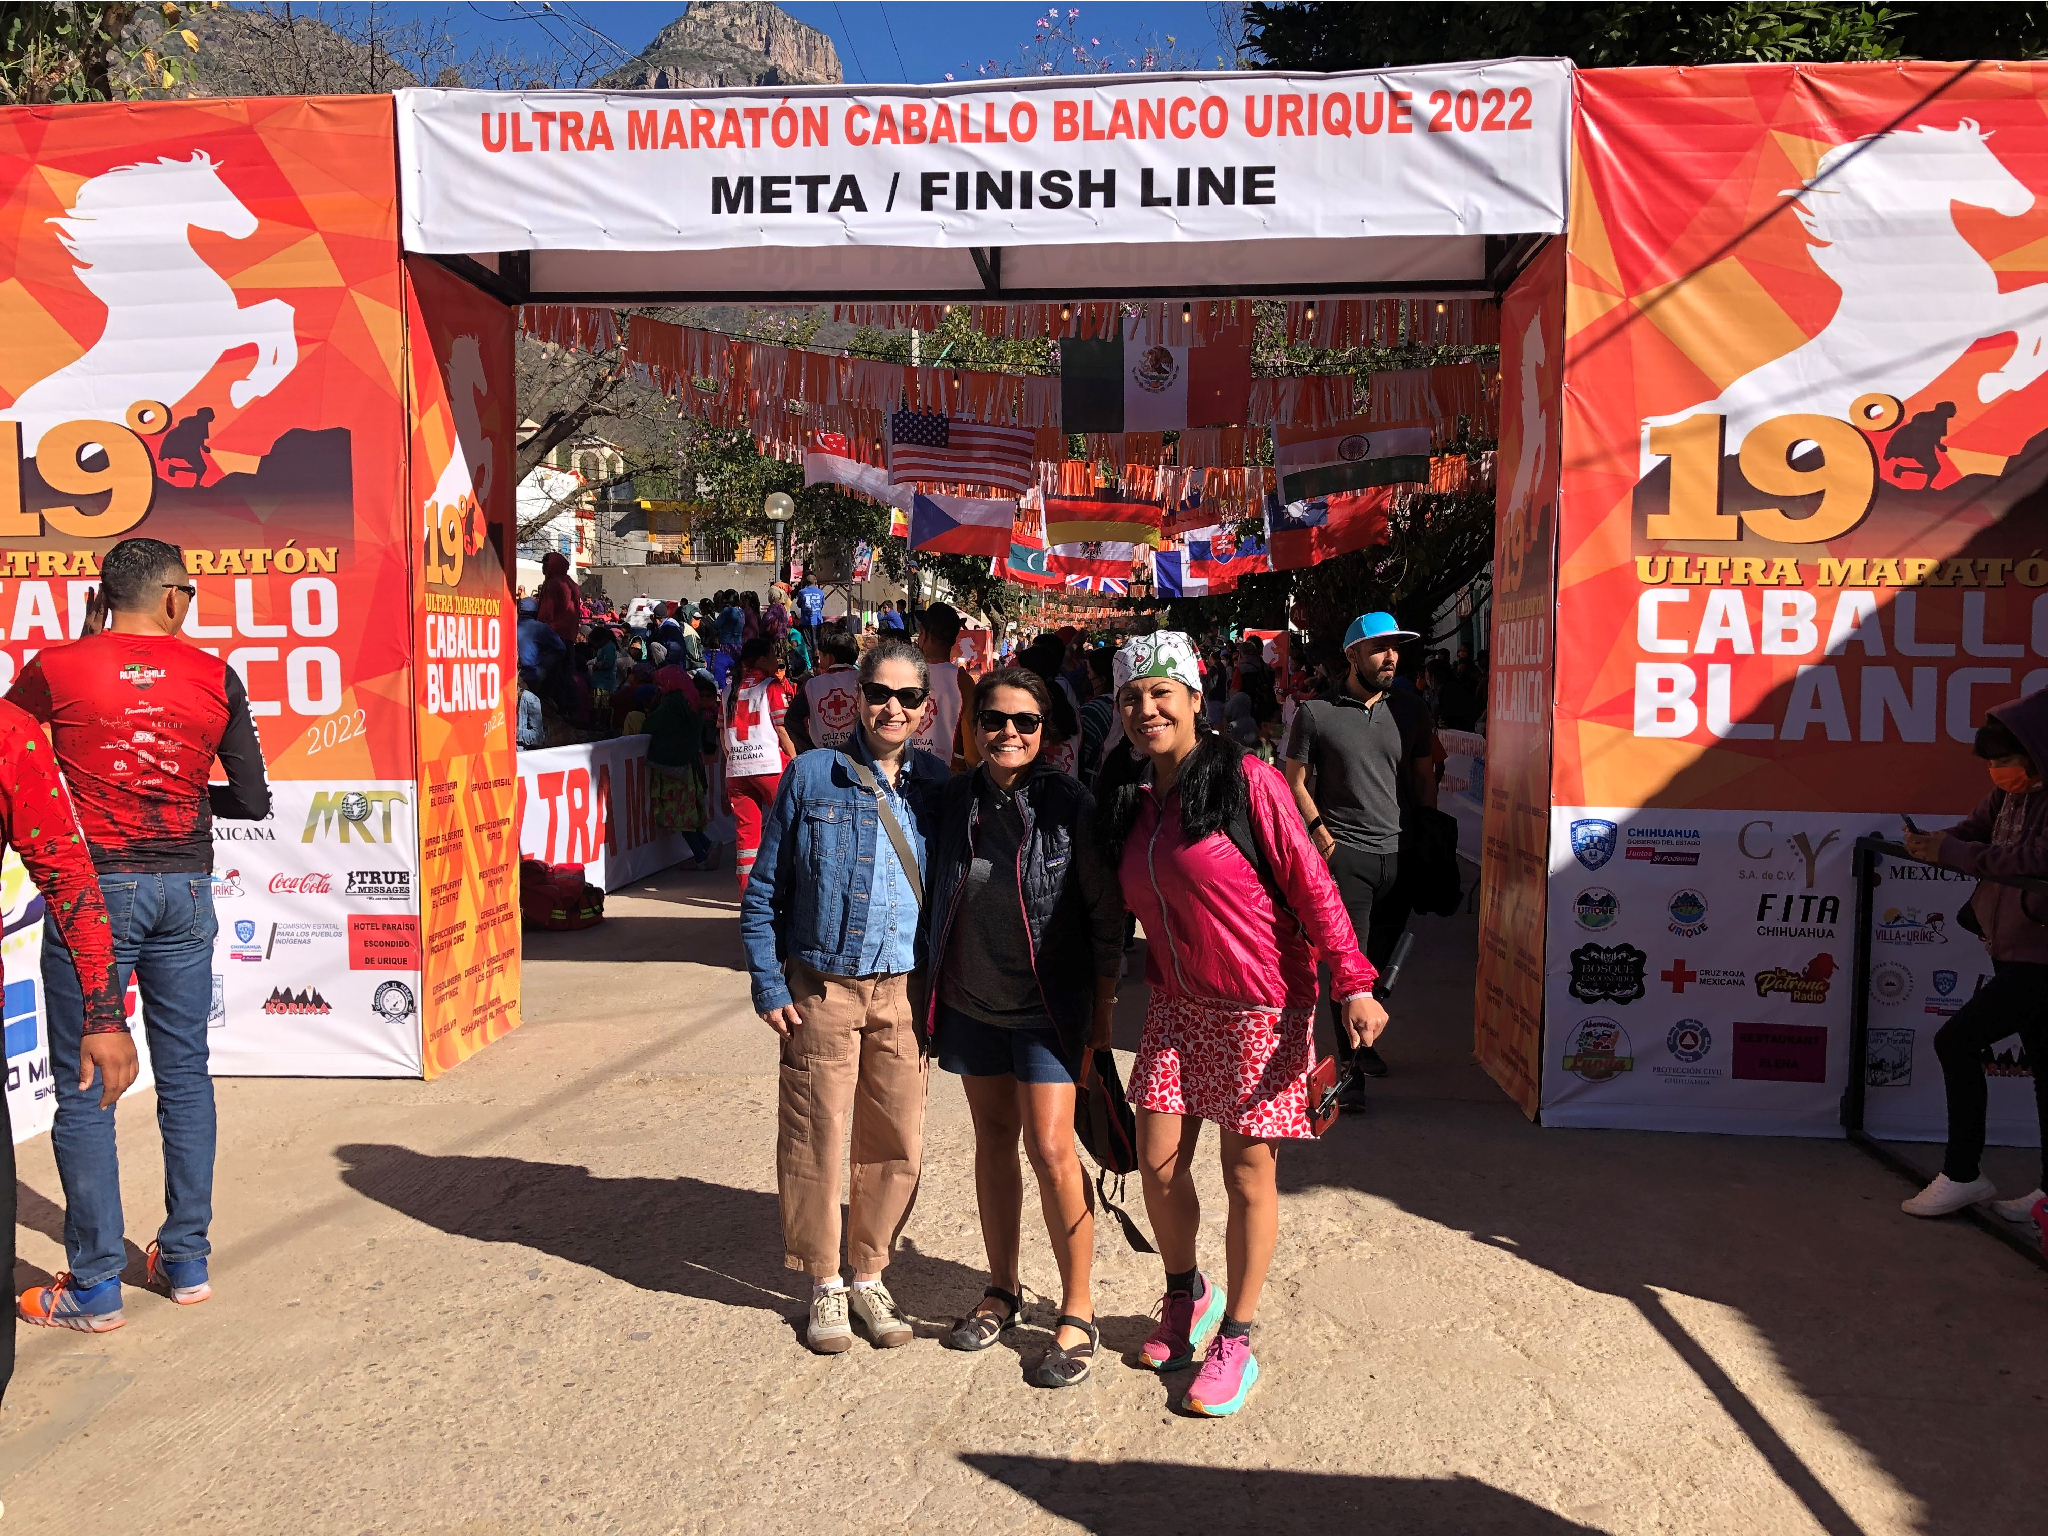 From left to right: Sacramento endurance athletes Lorena Van Rein, Norma Faubert, and Martha Rodriquez